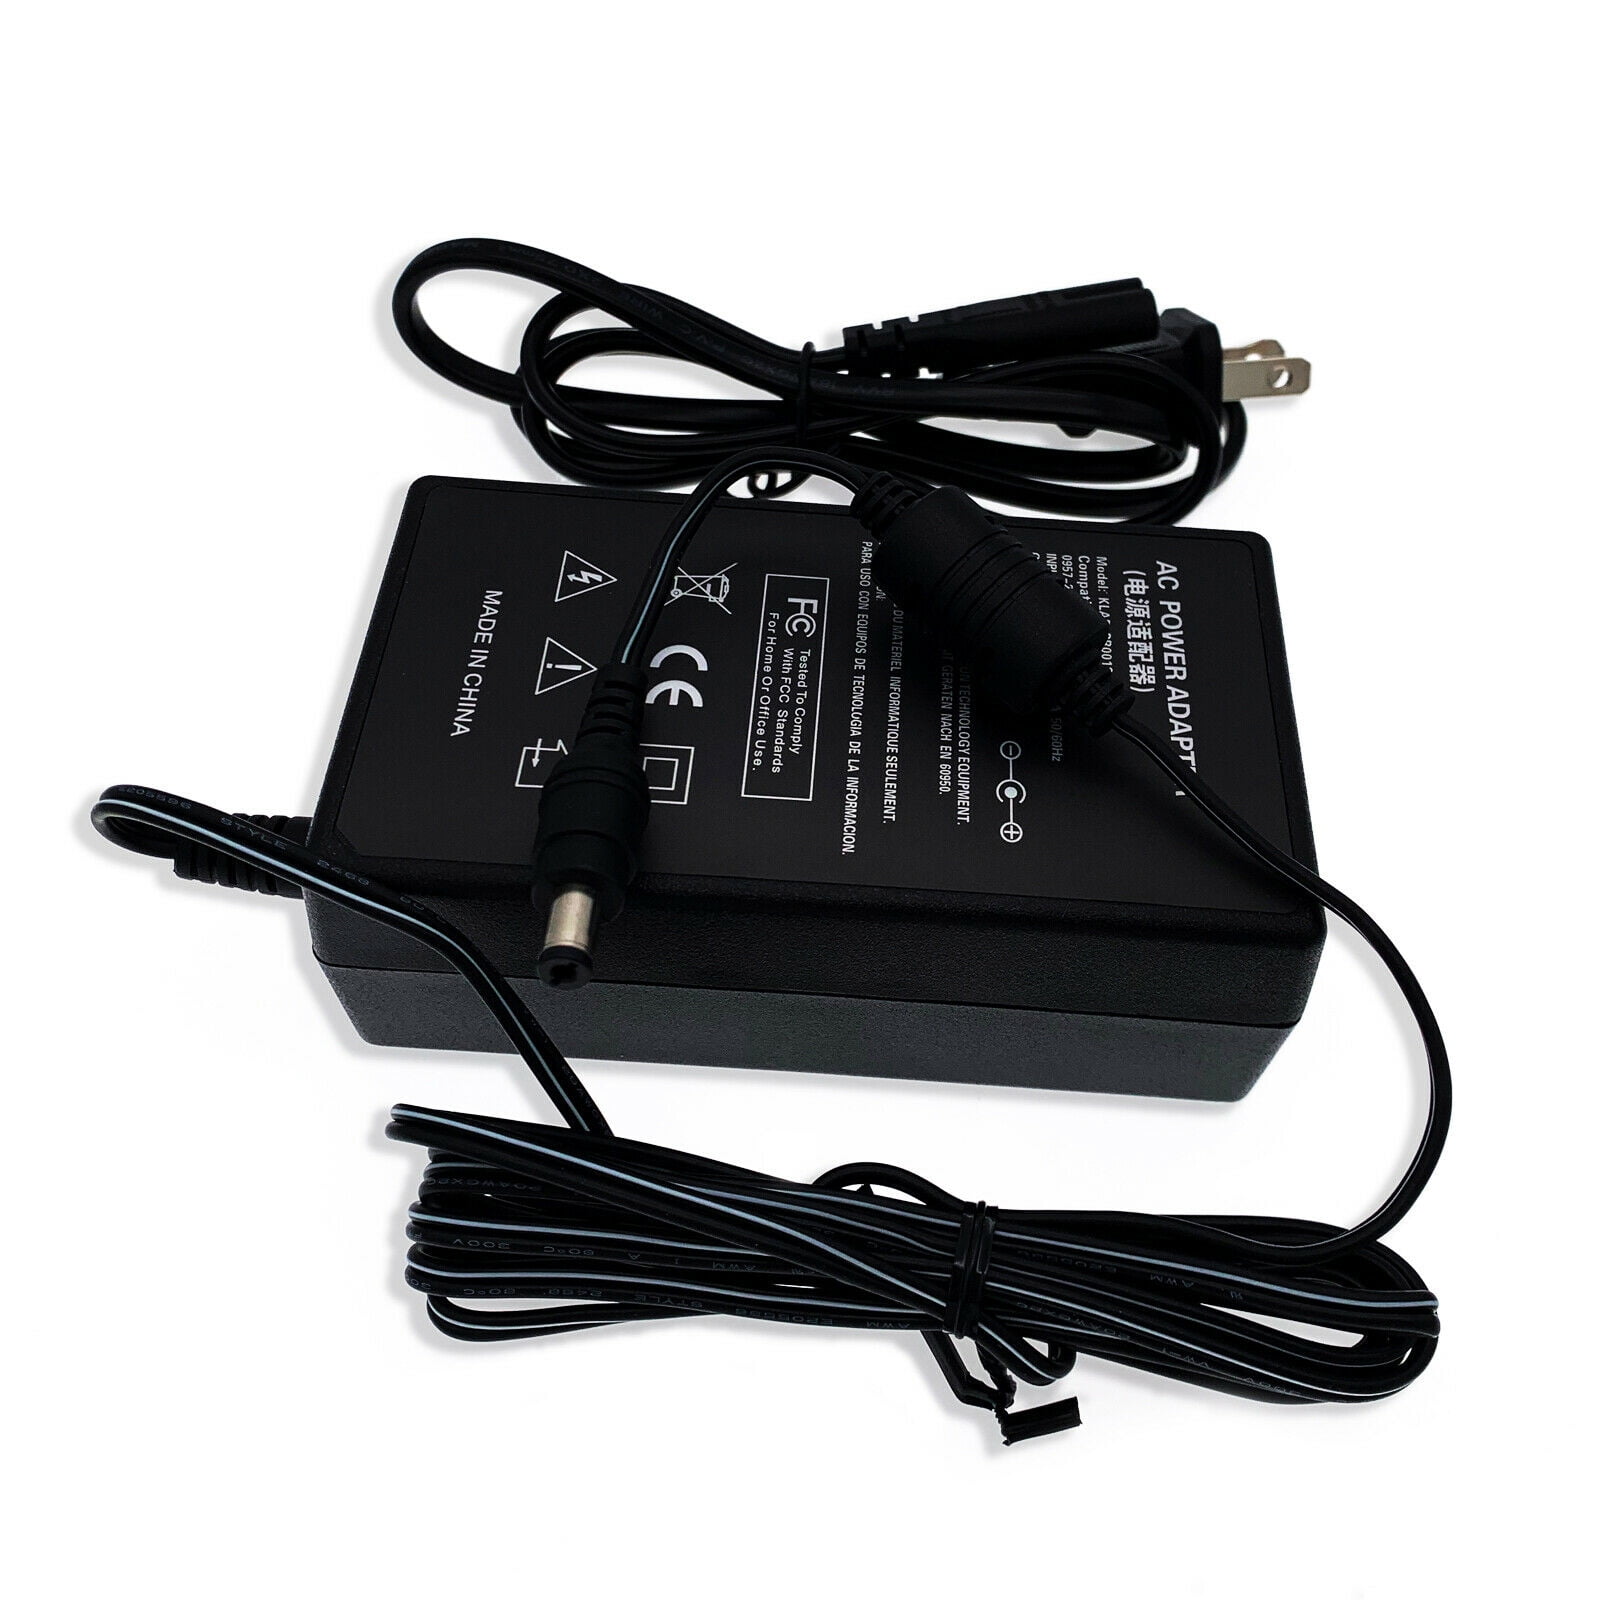 AC Adapter For HP Photosmart A612 A616 A617 A618 A626 A636 Printer Power Supply 